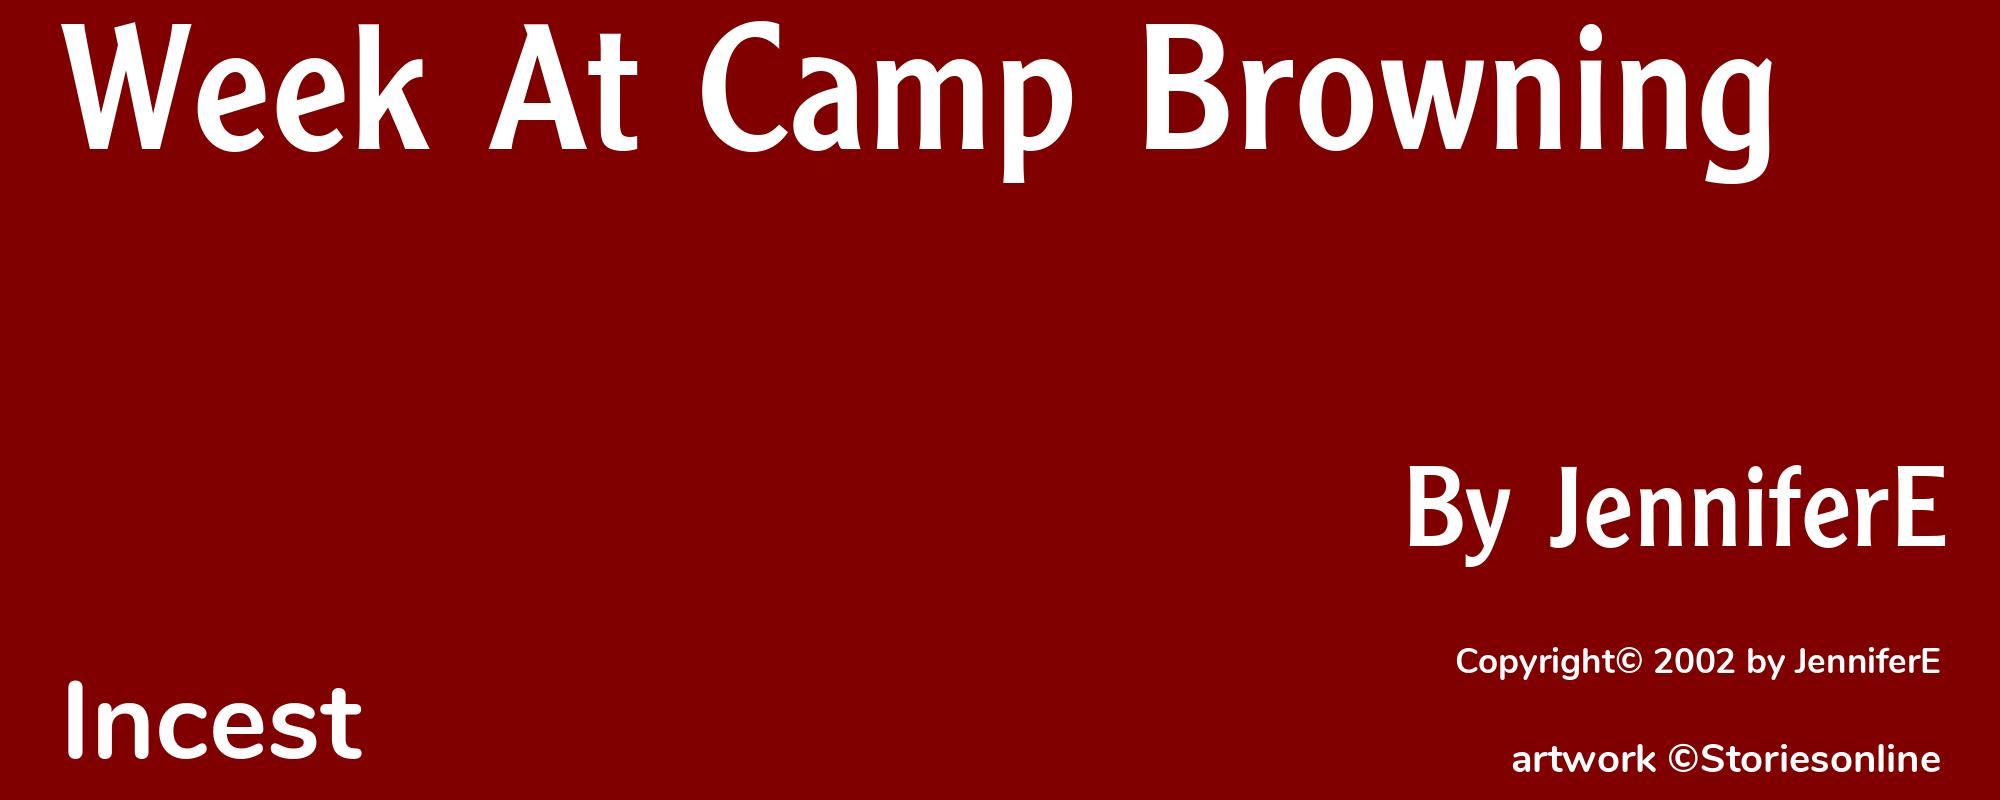 Week At Camp Browning - Cover